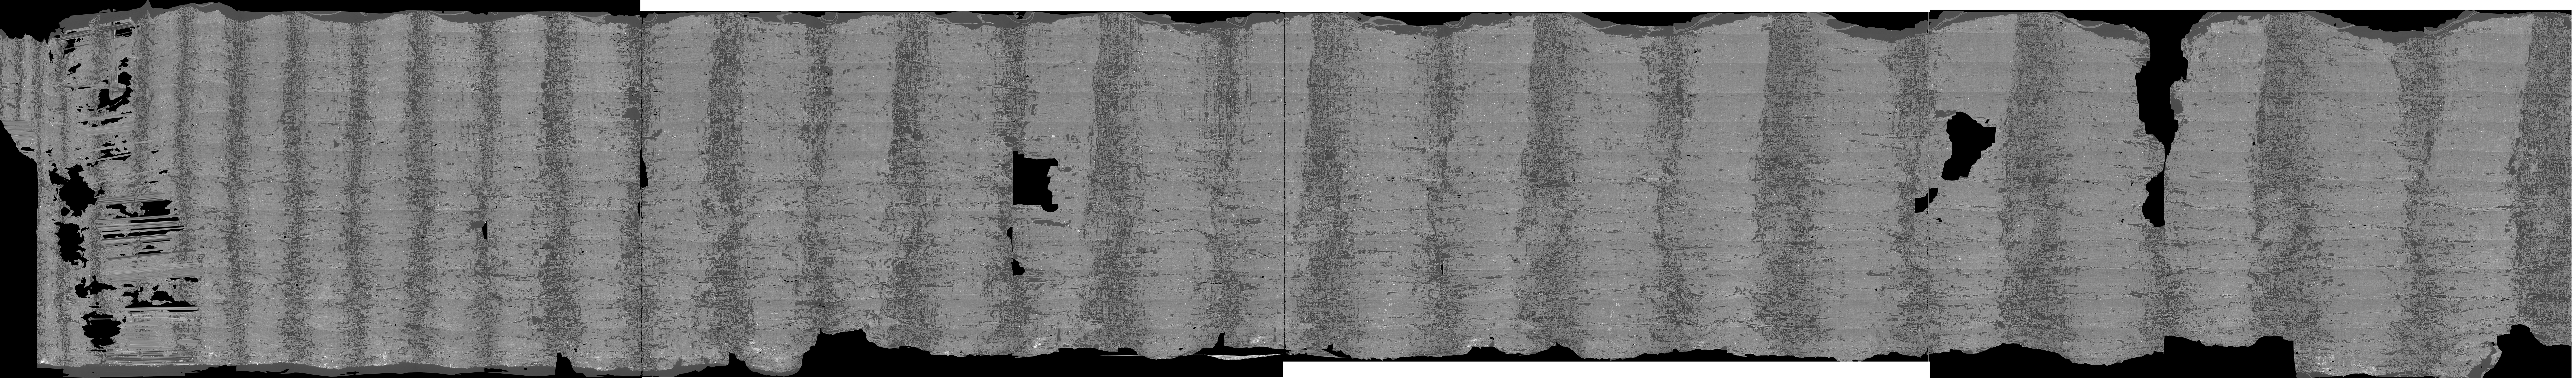 0.5 meter long segmentation of scroll 3